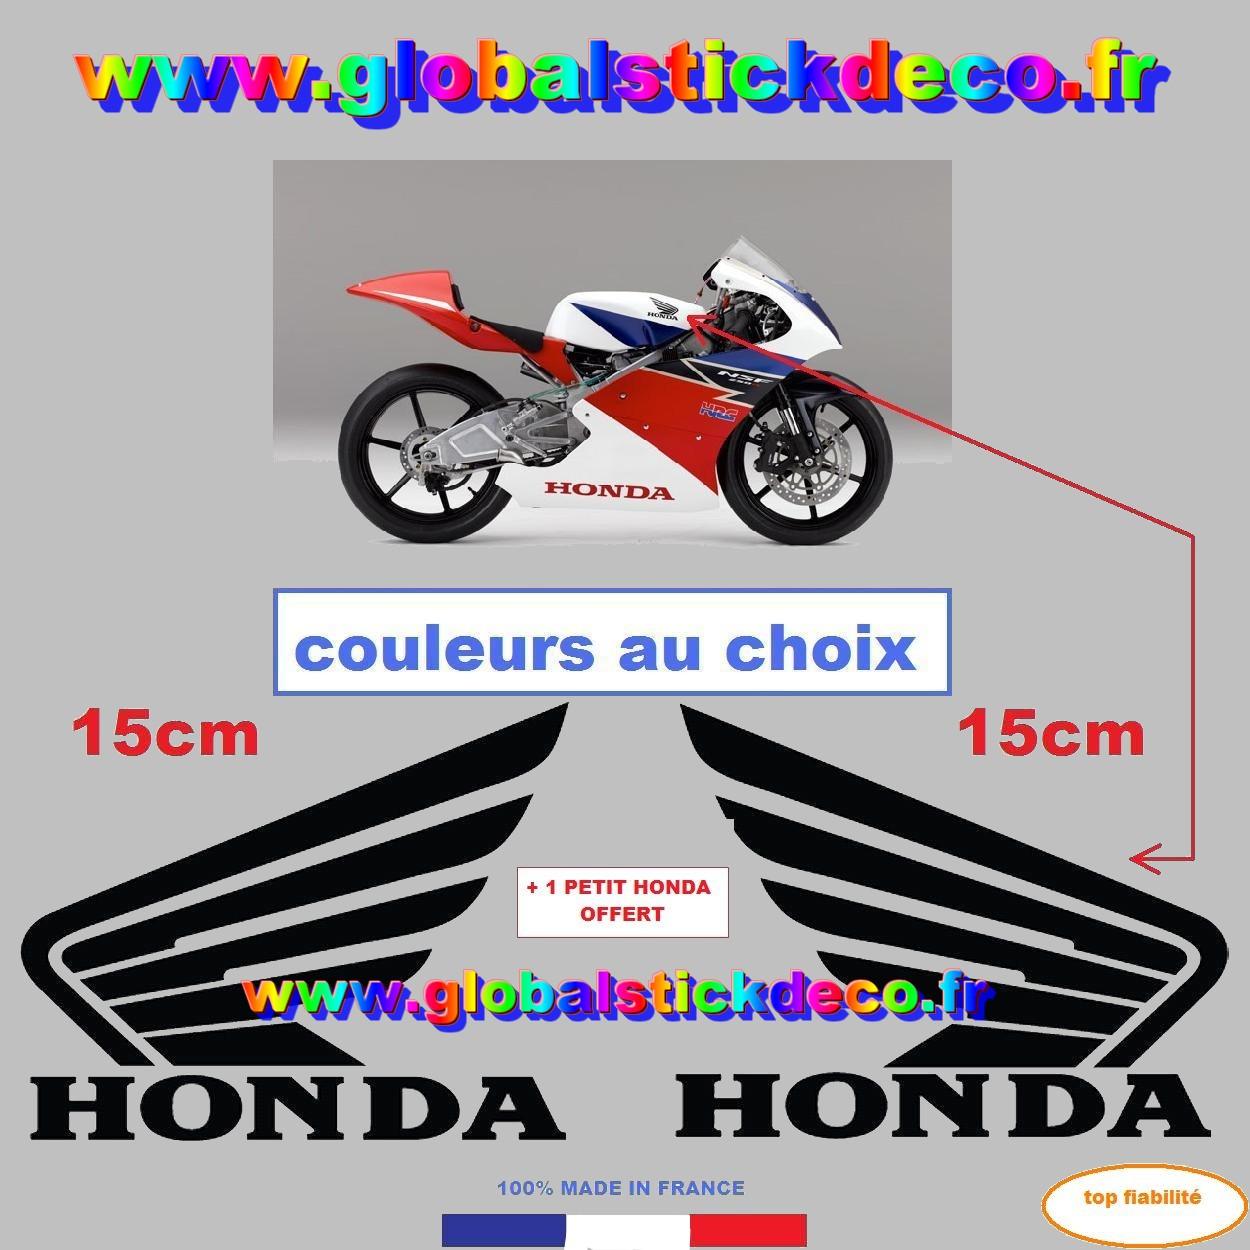 Honda en 15cm 1